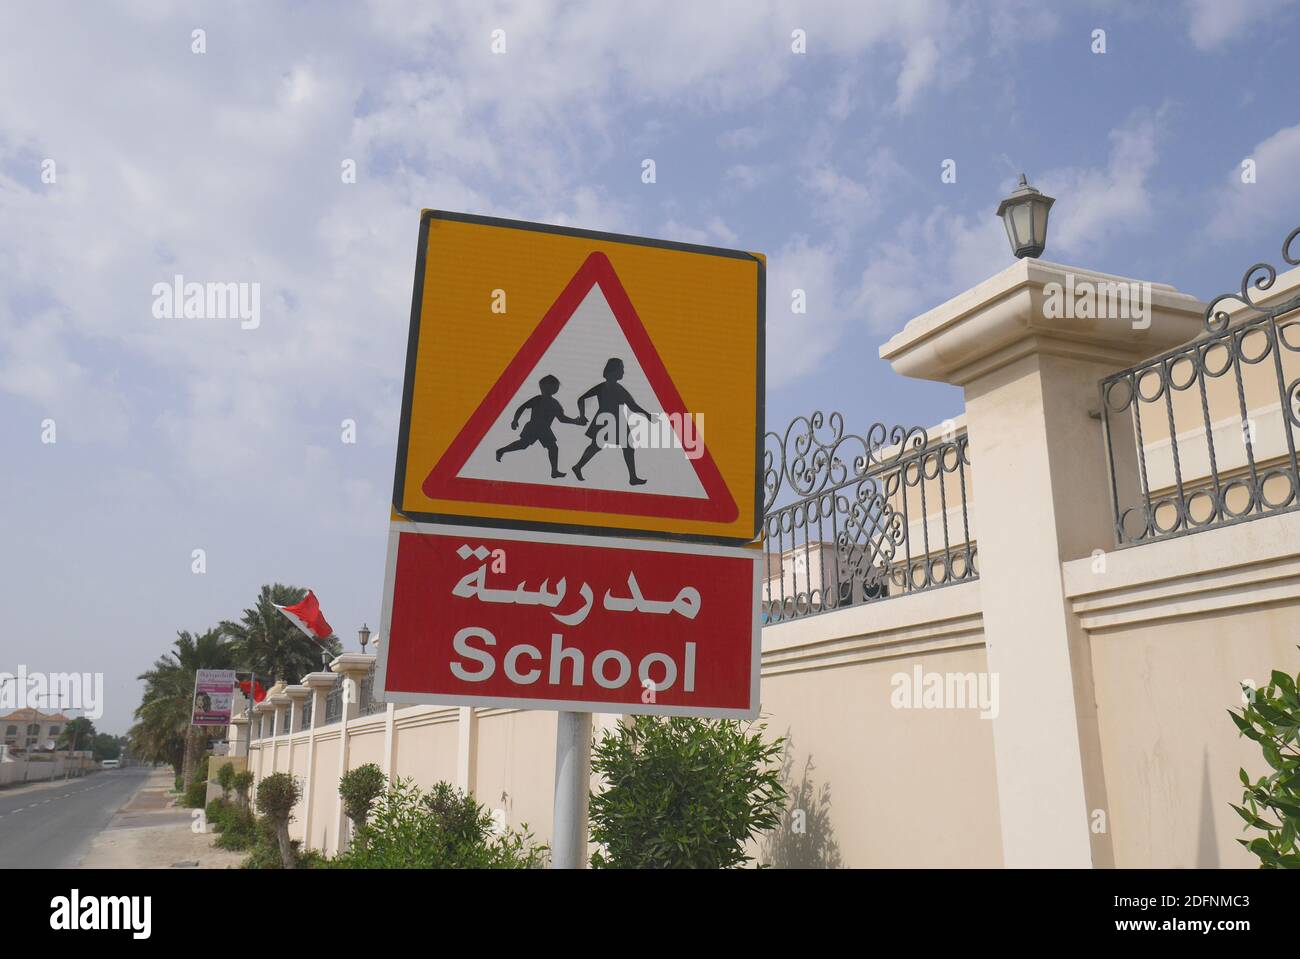 Bilingual school sign, Arabic and English, Maqaba, Kingdom of Bahrain Stock Photo